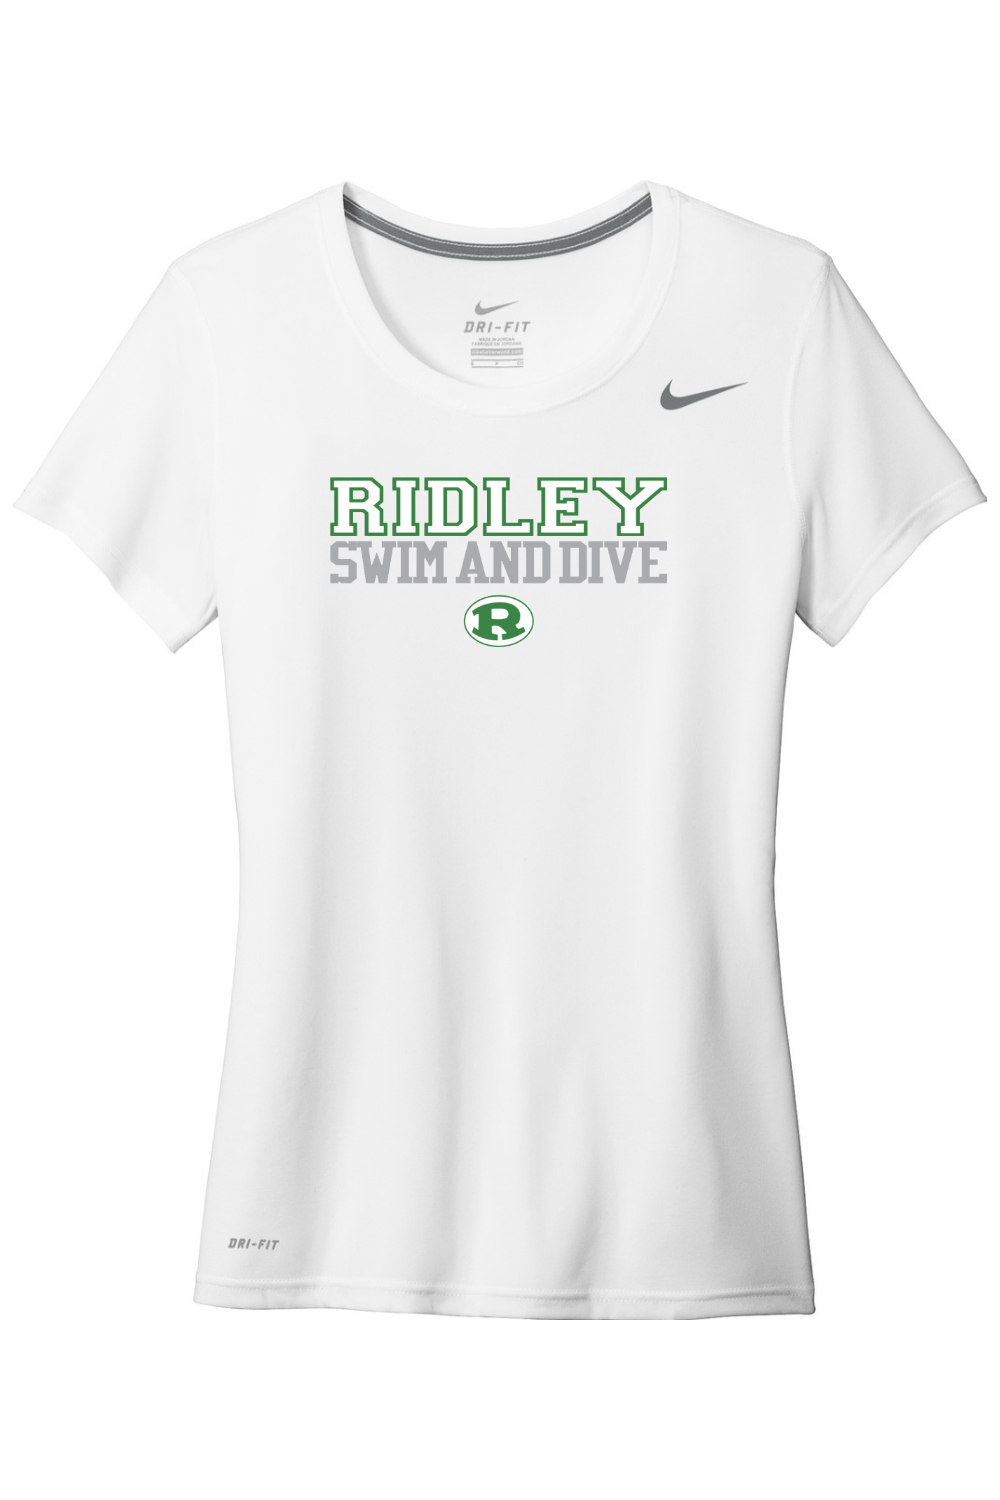 Ridley Swim and Dive Nike Ladies Legend Tee